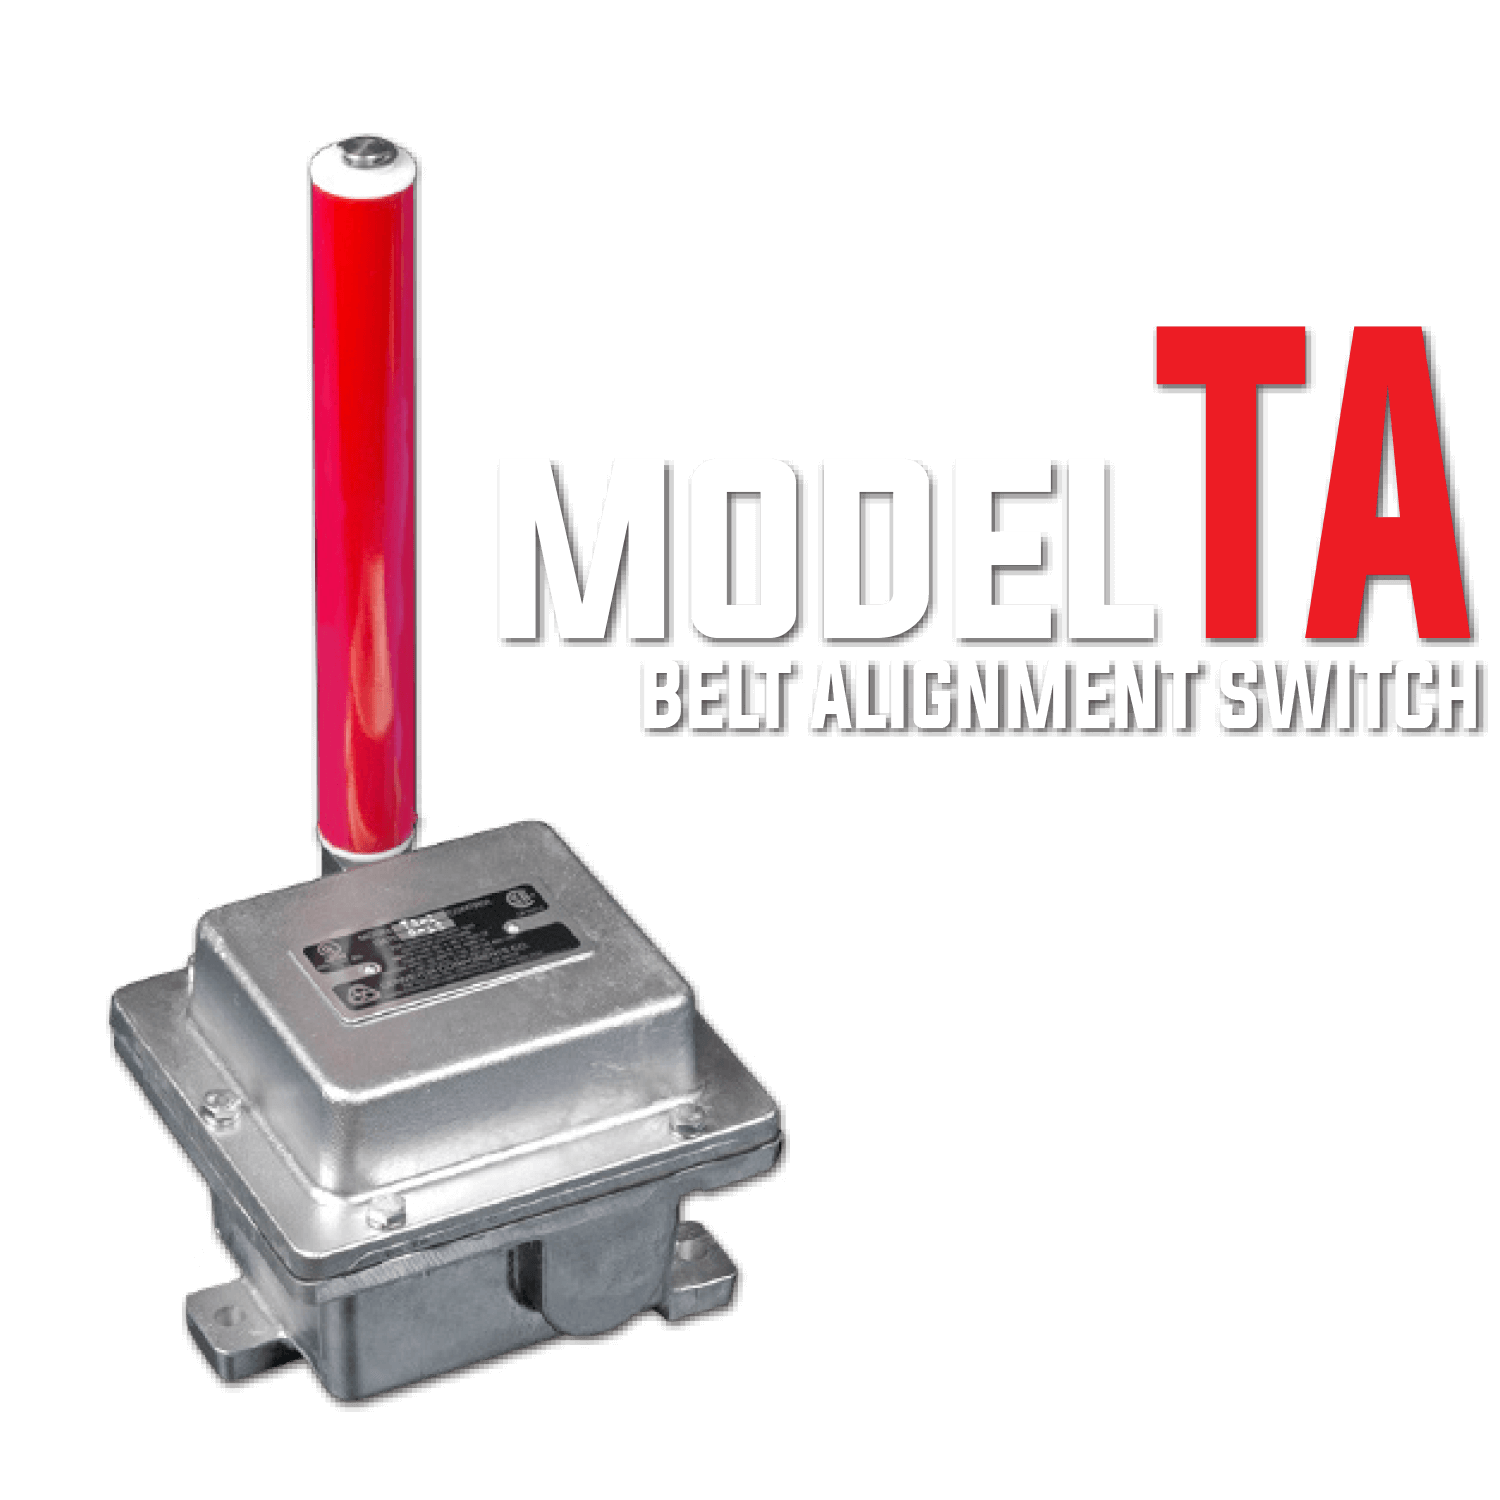 Model TA Belt Alignment Switch